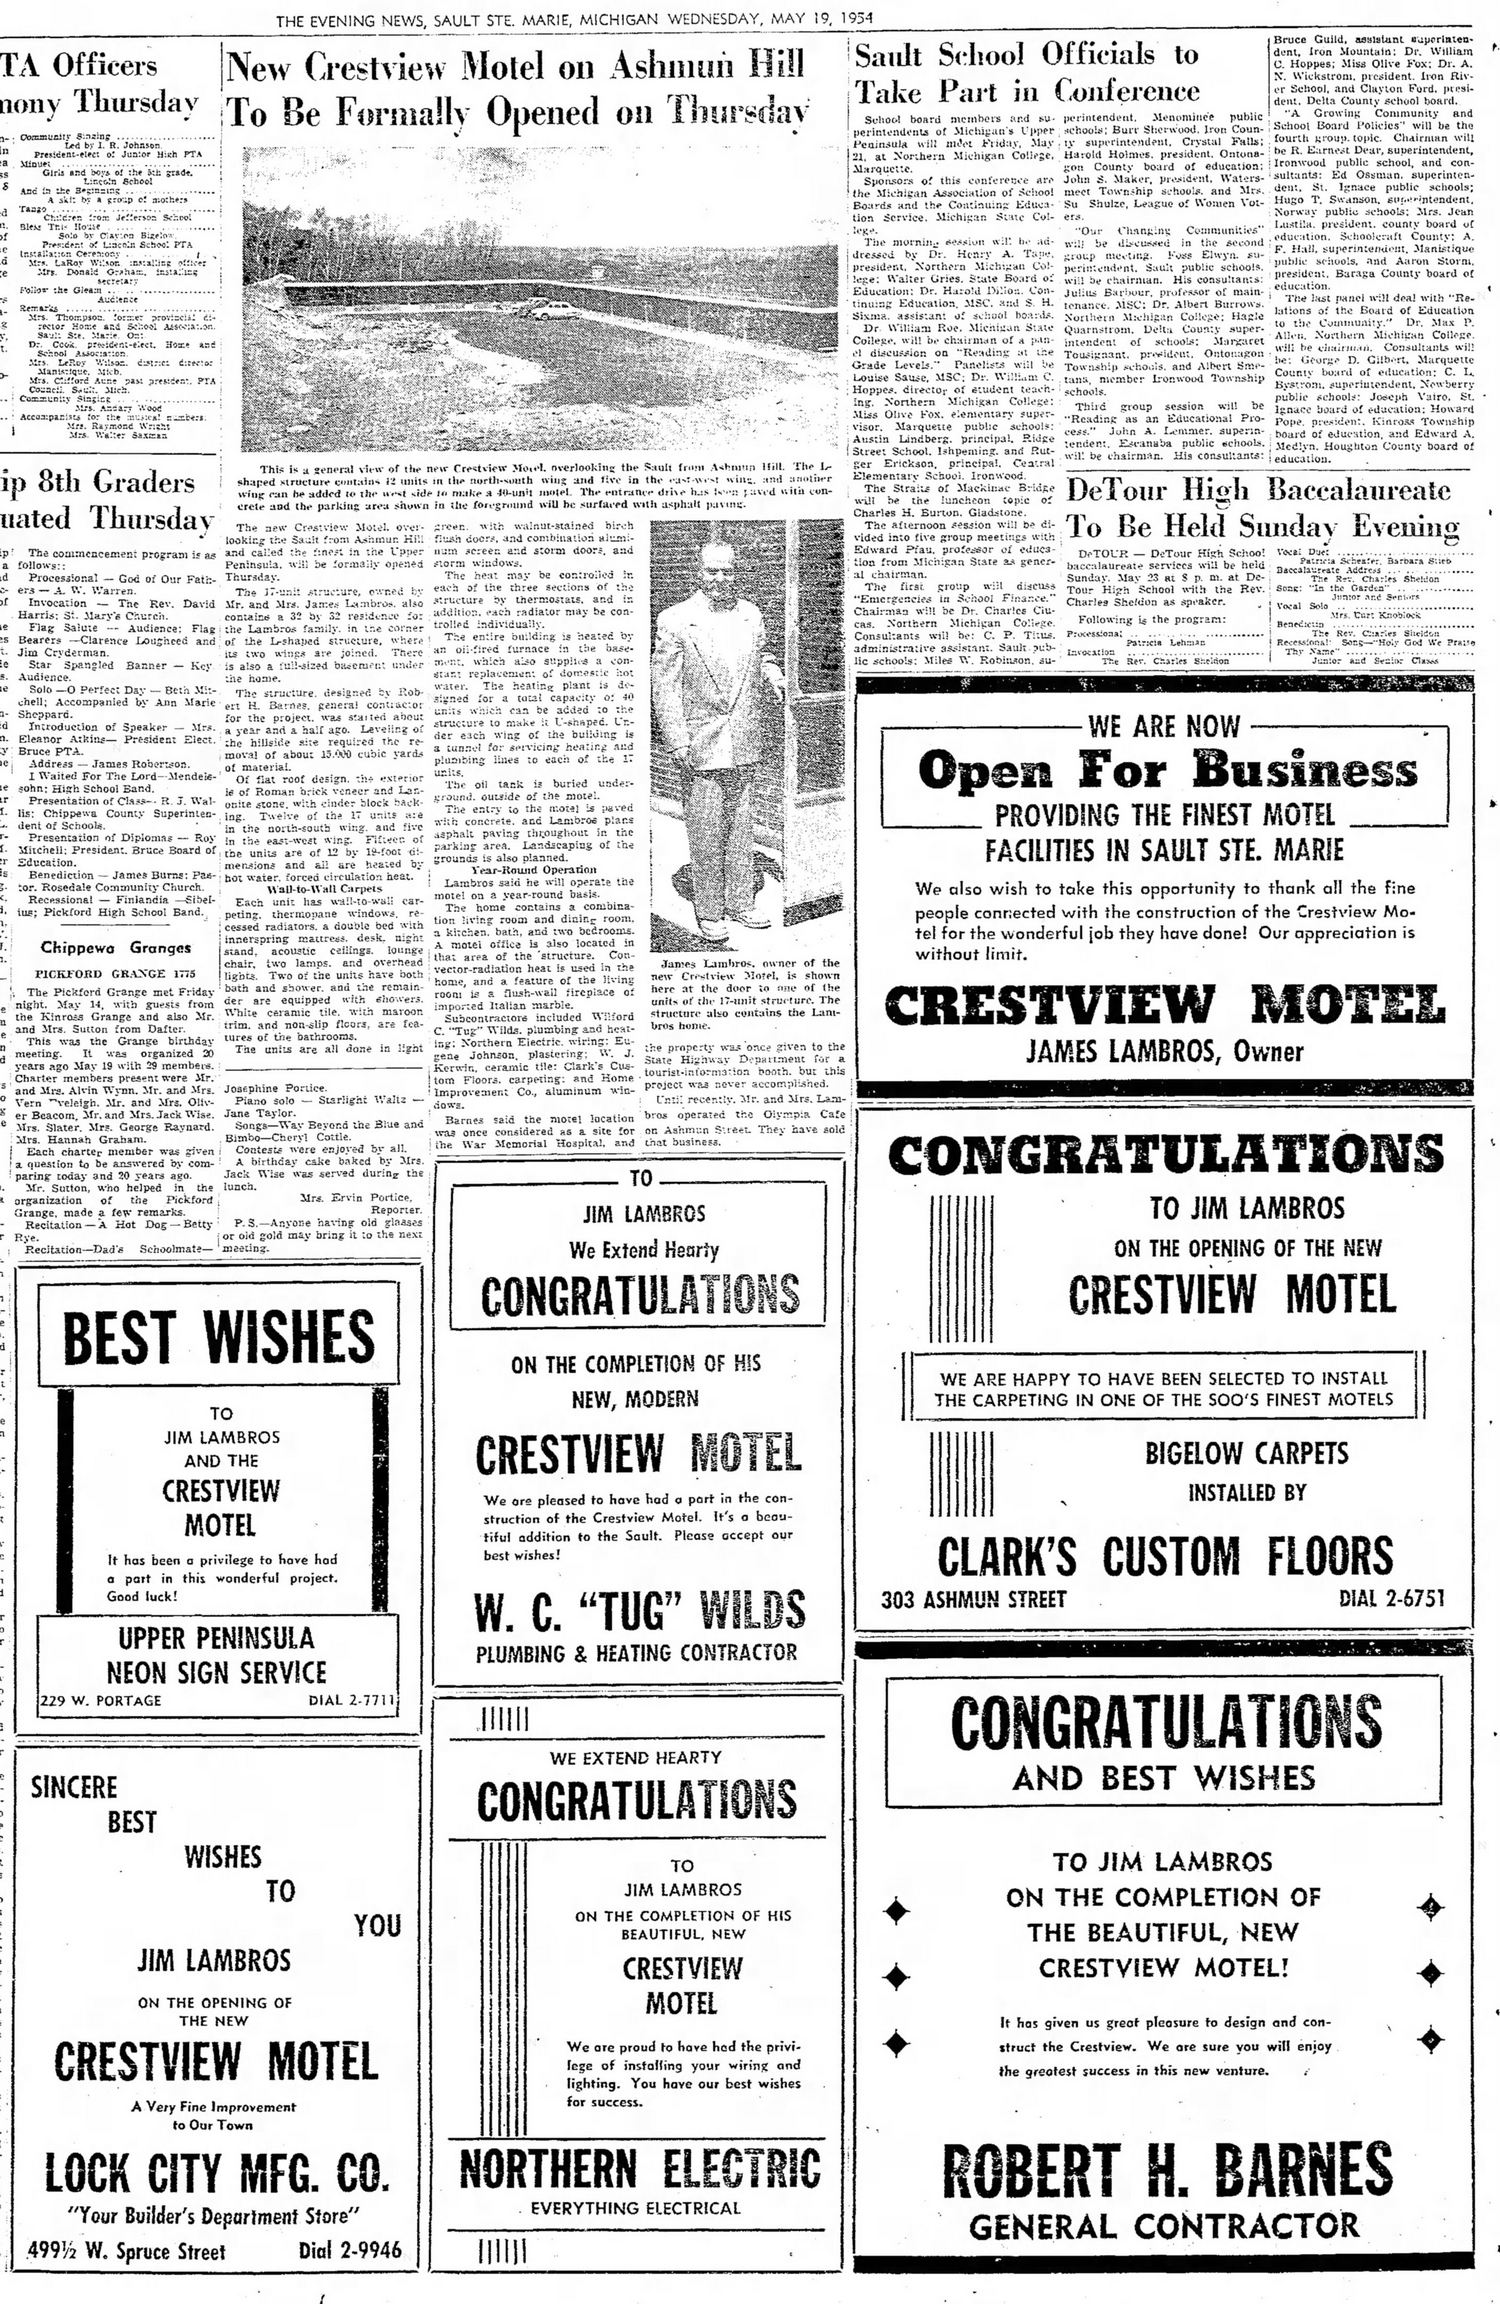 Budget Host Crestview Inn (Crestview Motel, Thrifty Inn$) - May 19 1954 Opening Article